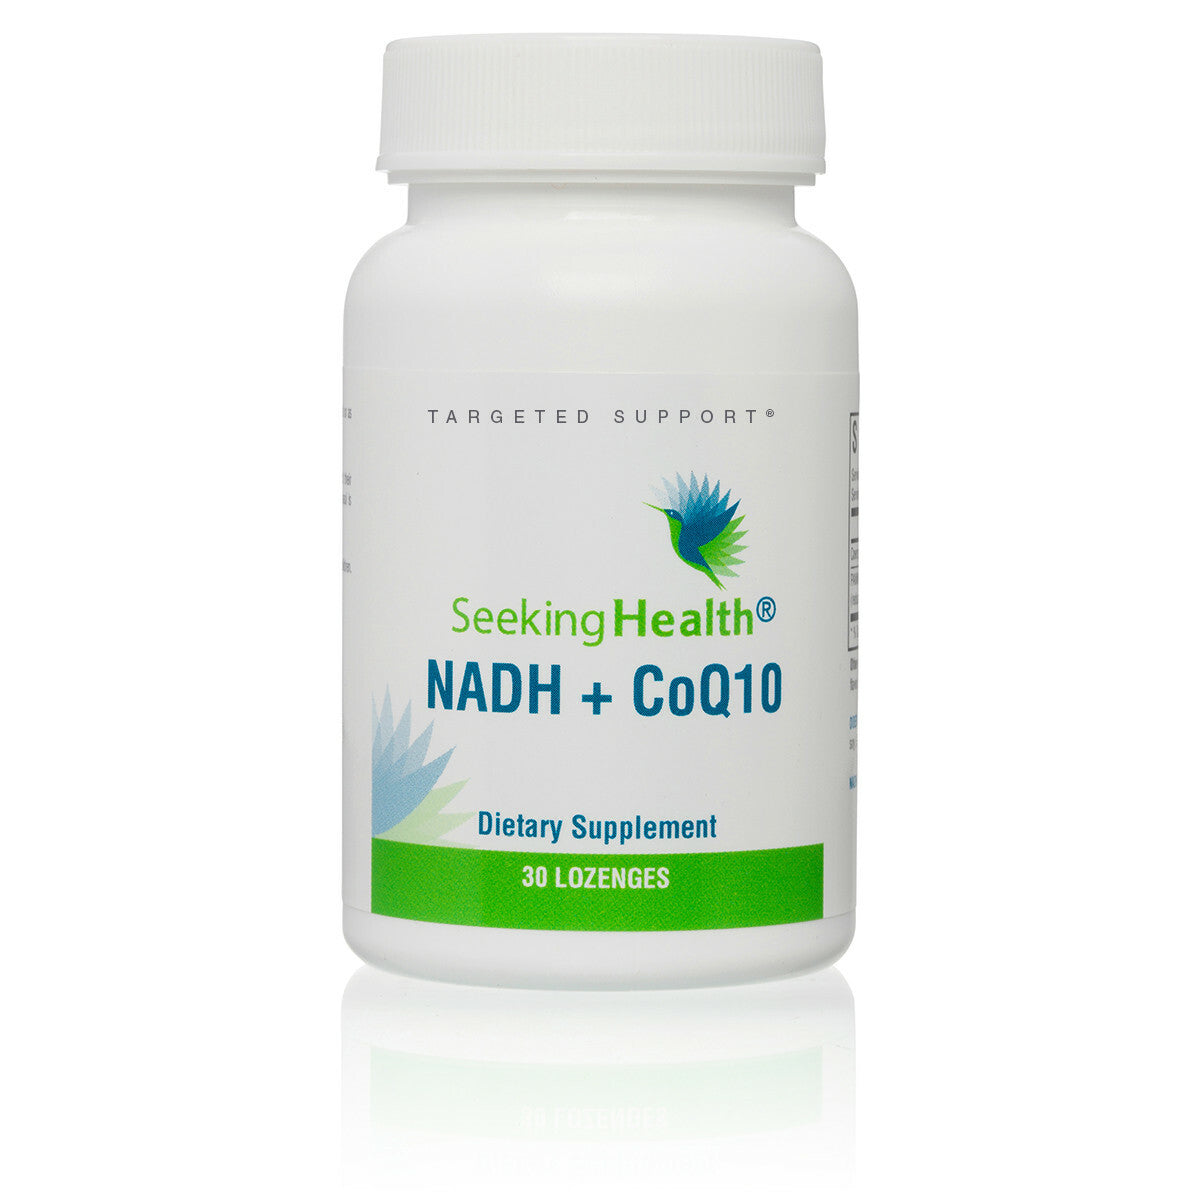 NADH + CoQ10 - 30 lozenges Seeking Health - Premium Vitamins & Supplements from Seeking Health - Just $32.95! Shop now at Nutrigeek